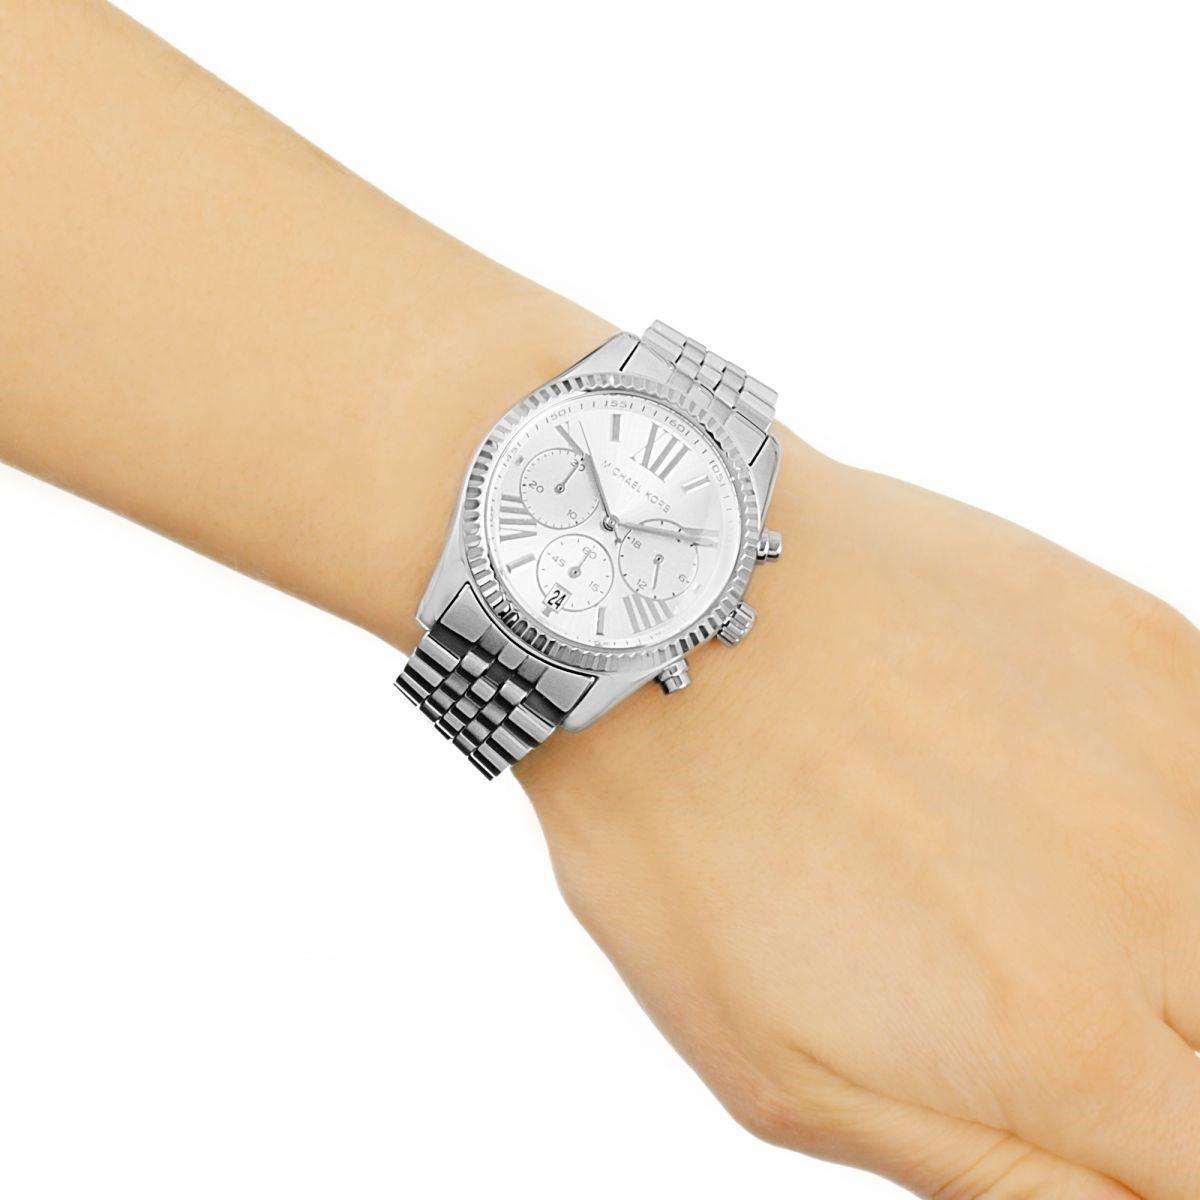 Michael Kors MK5555 Vintage Classic Lexington Chronograph Women's Watch - Watch Home™